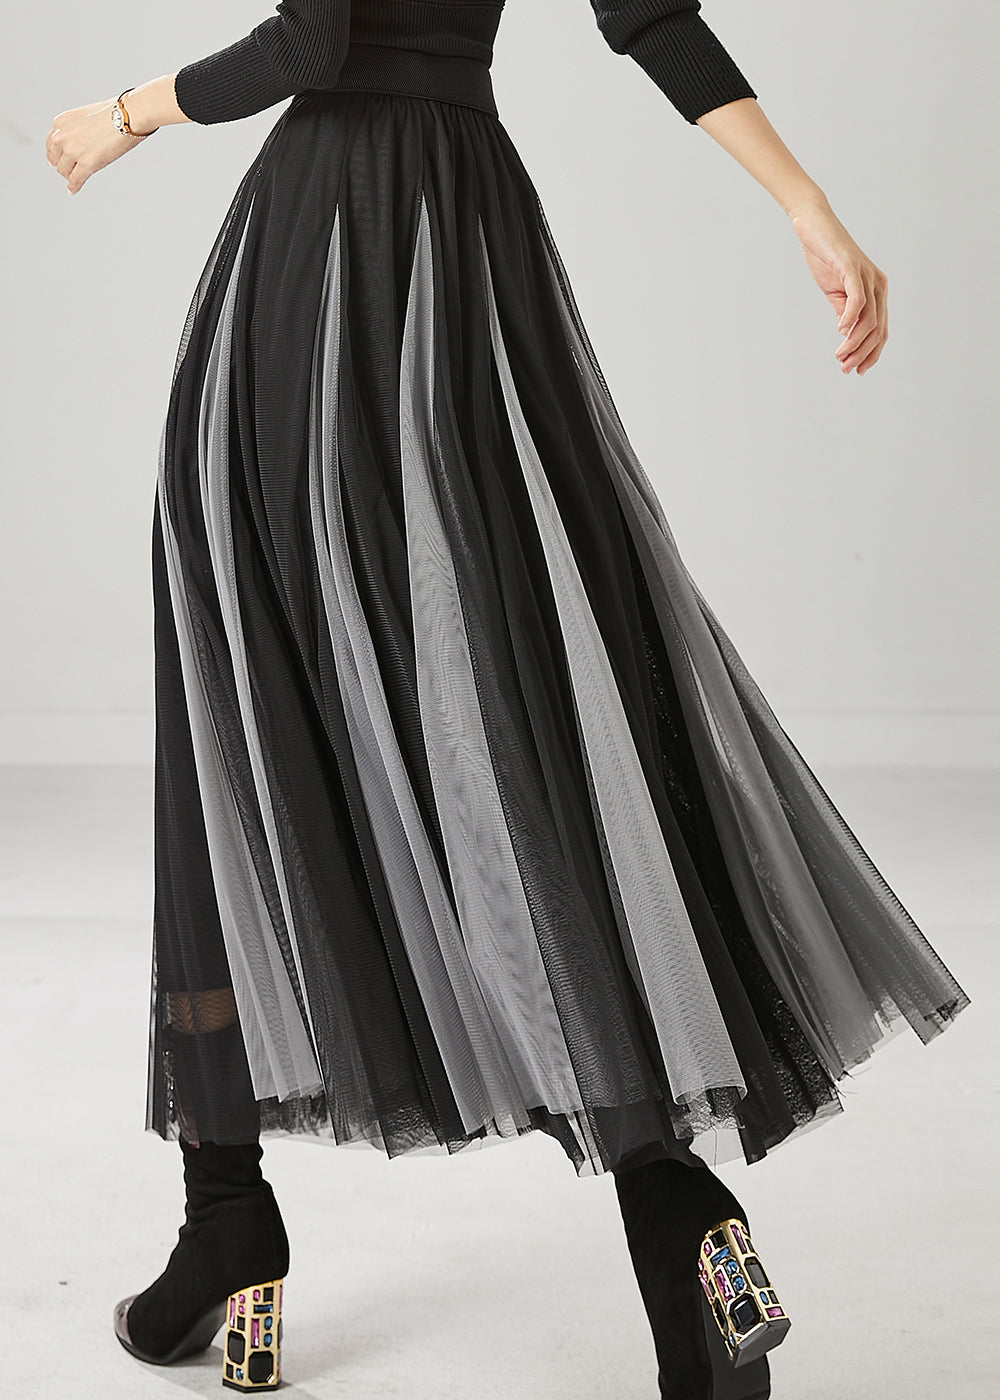 Black Grey Patchwork Tulle Holiday Skirts Wrinkled Spring